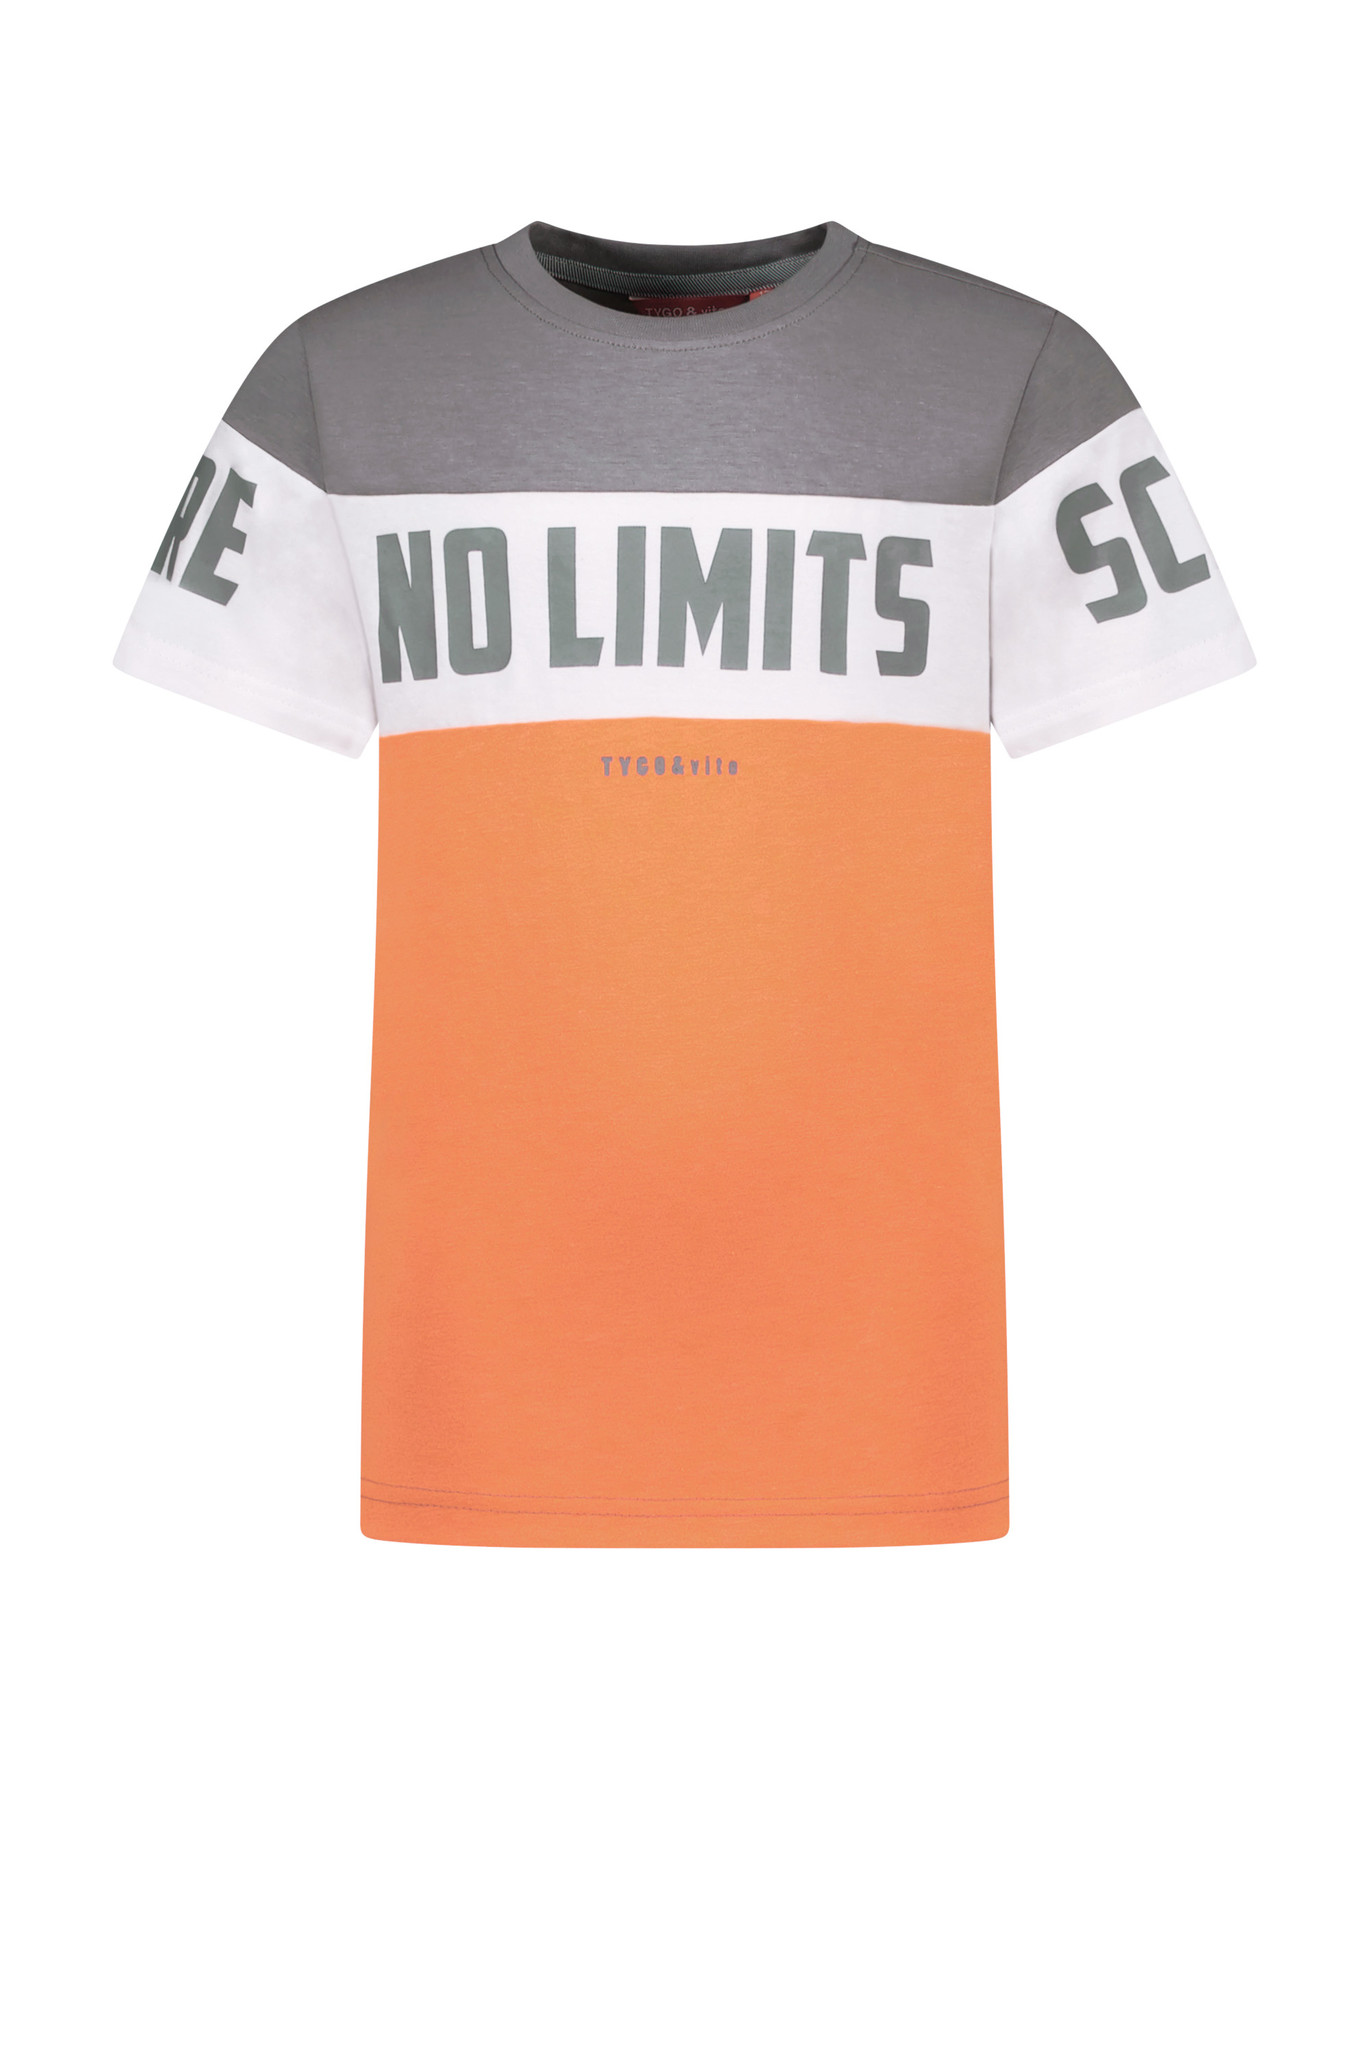 Tygo & Vito Jongens t-shirt No limits - Grijs